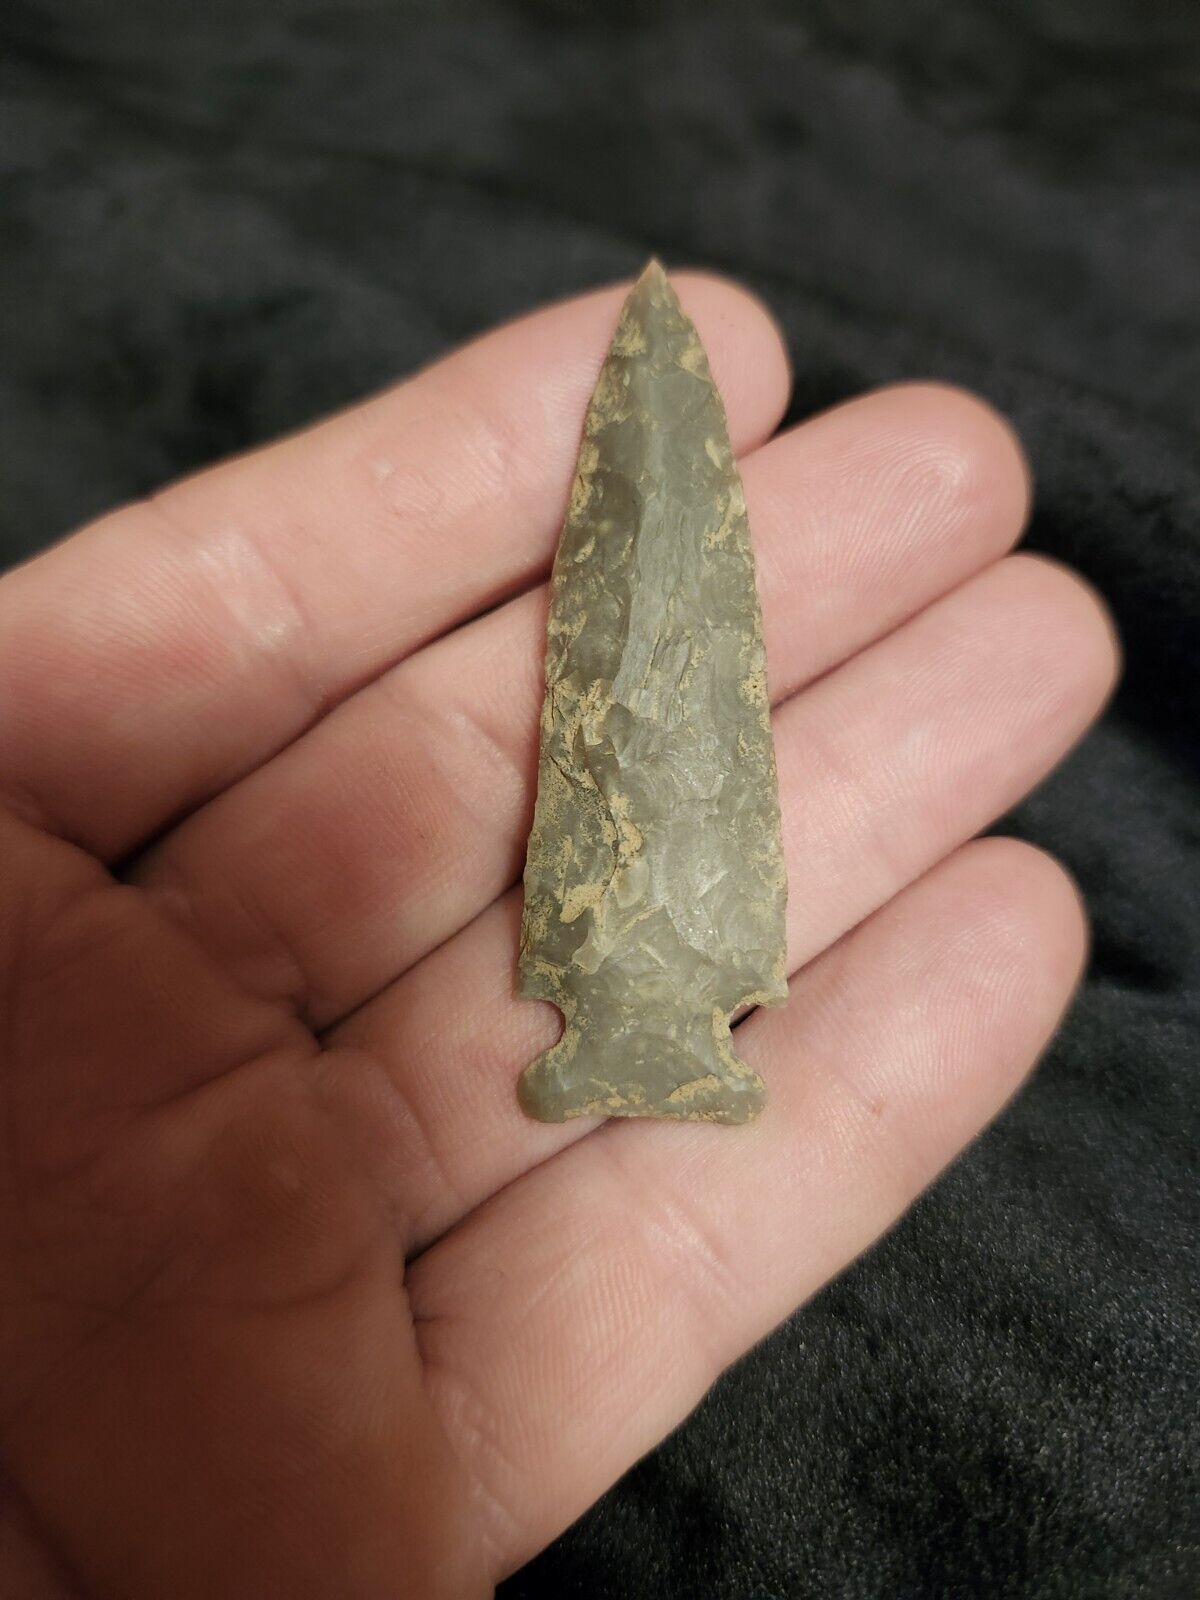 Authentic Arrowhead Native American Artifact